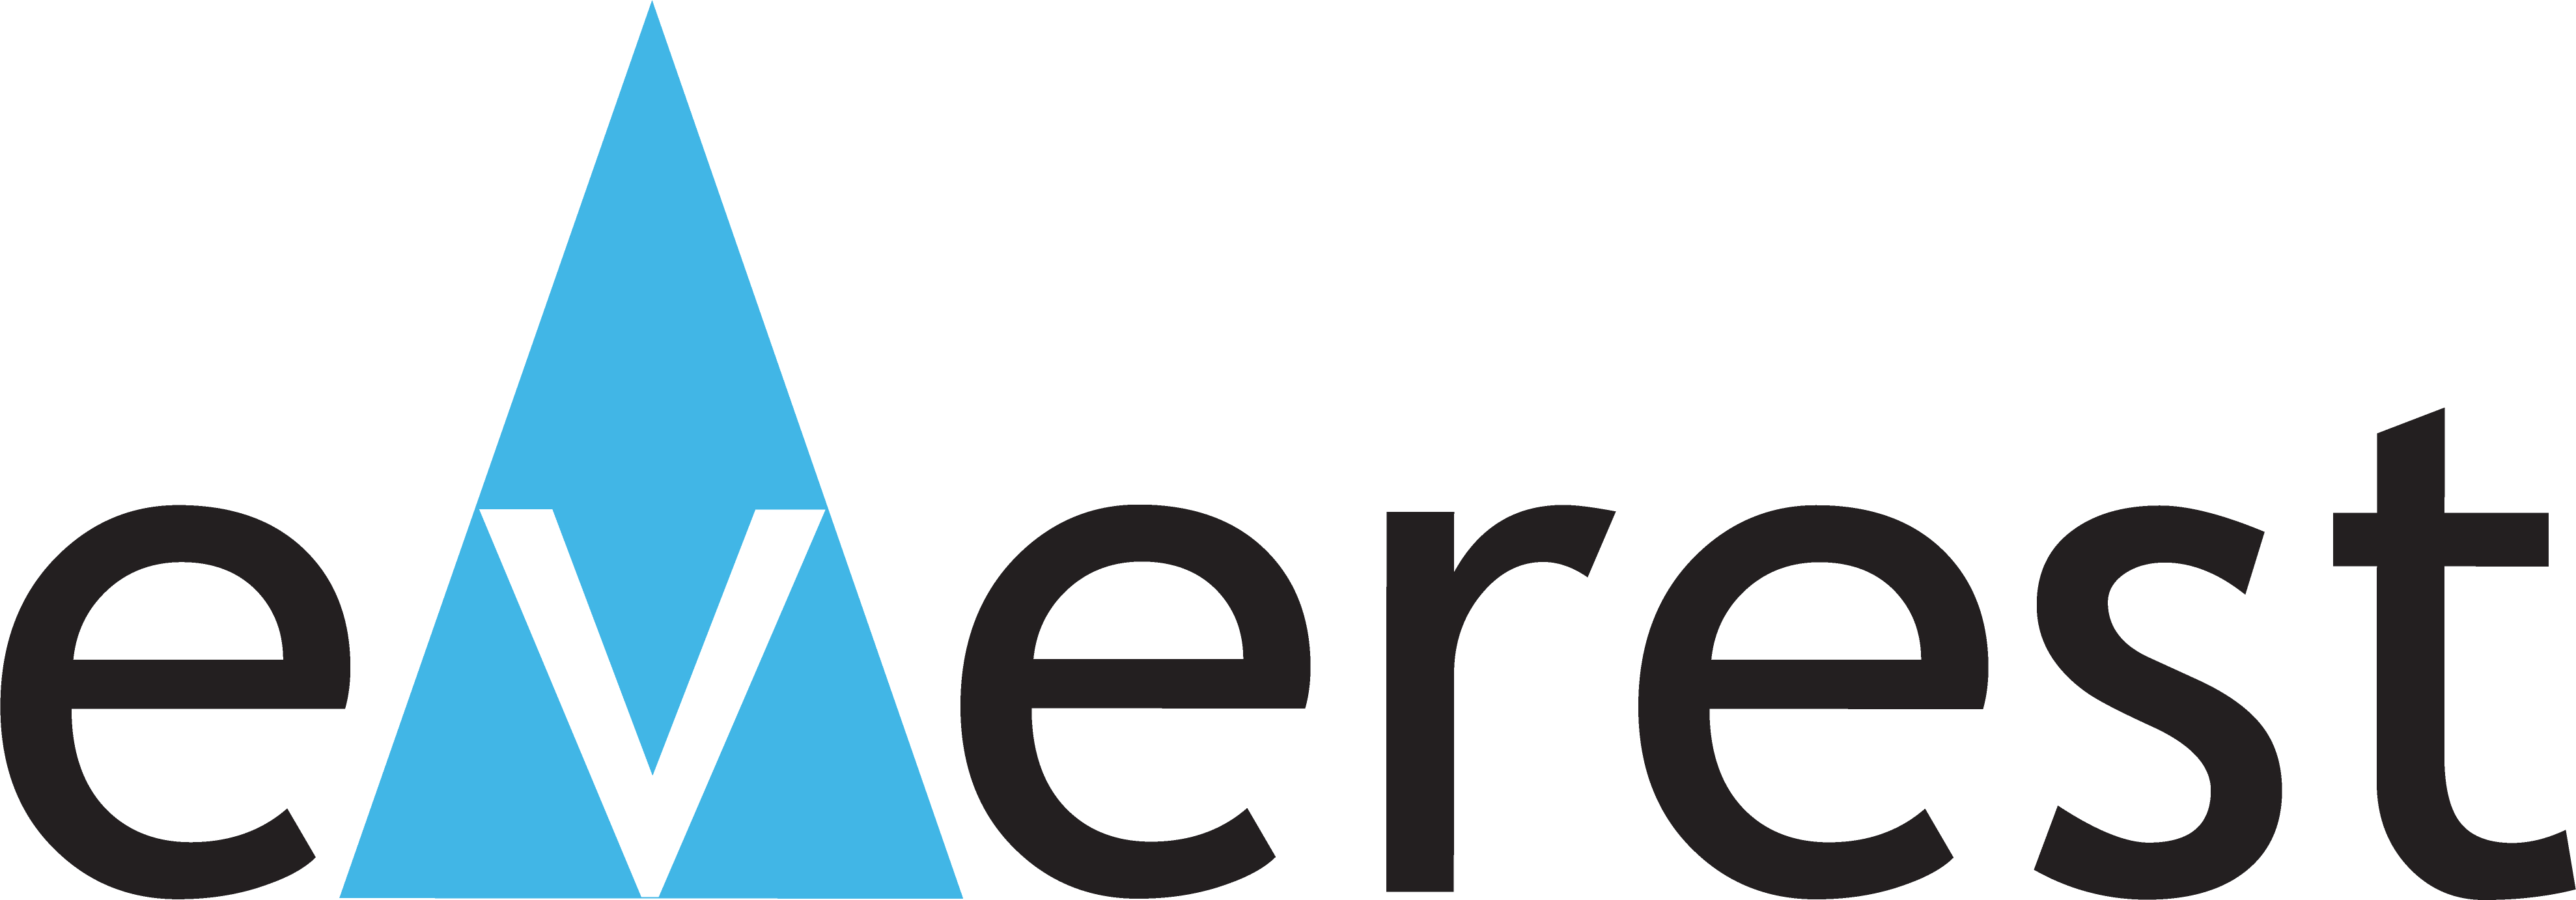 Everest Biotech Logo